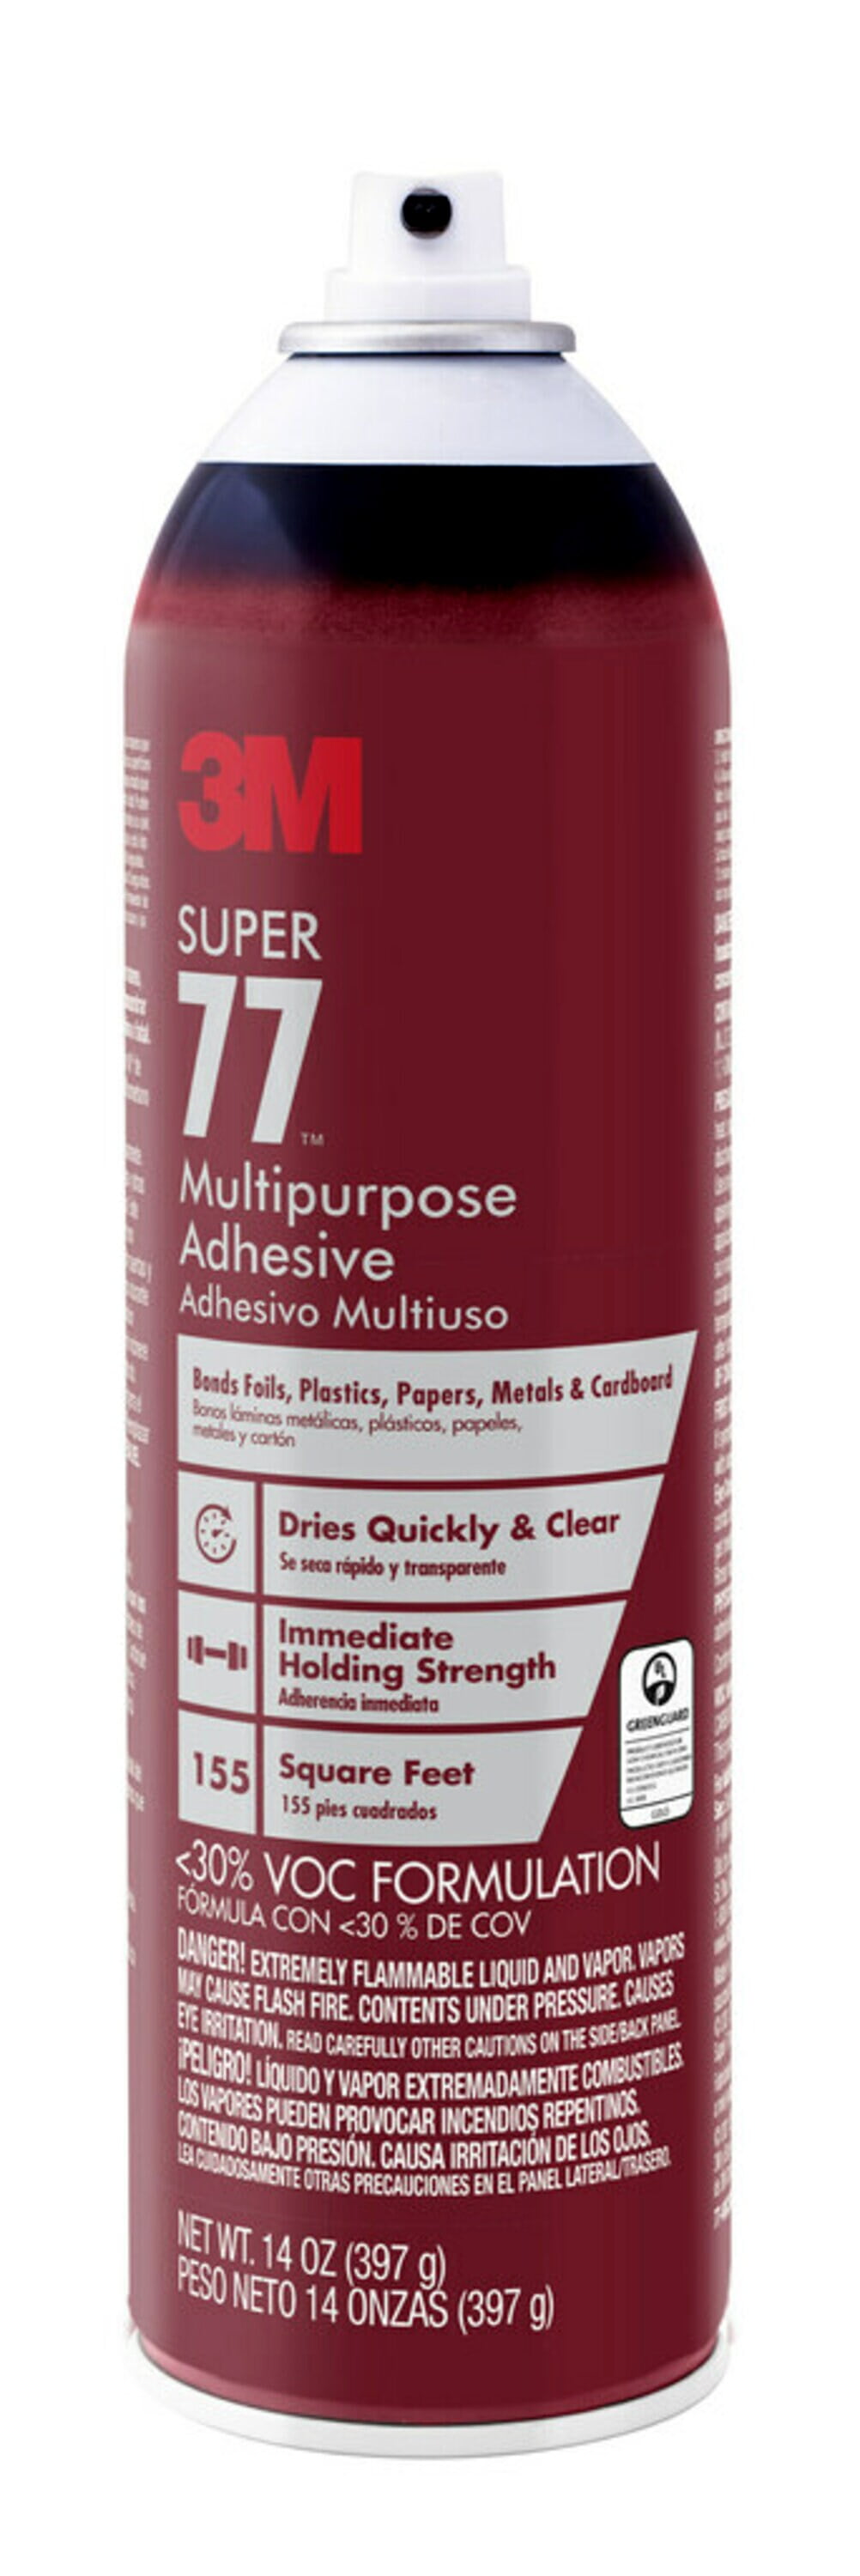 3M™ Super 77 Multipurpose Adhesive - NEW, SEALED, NET WT 4.4 OZ 